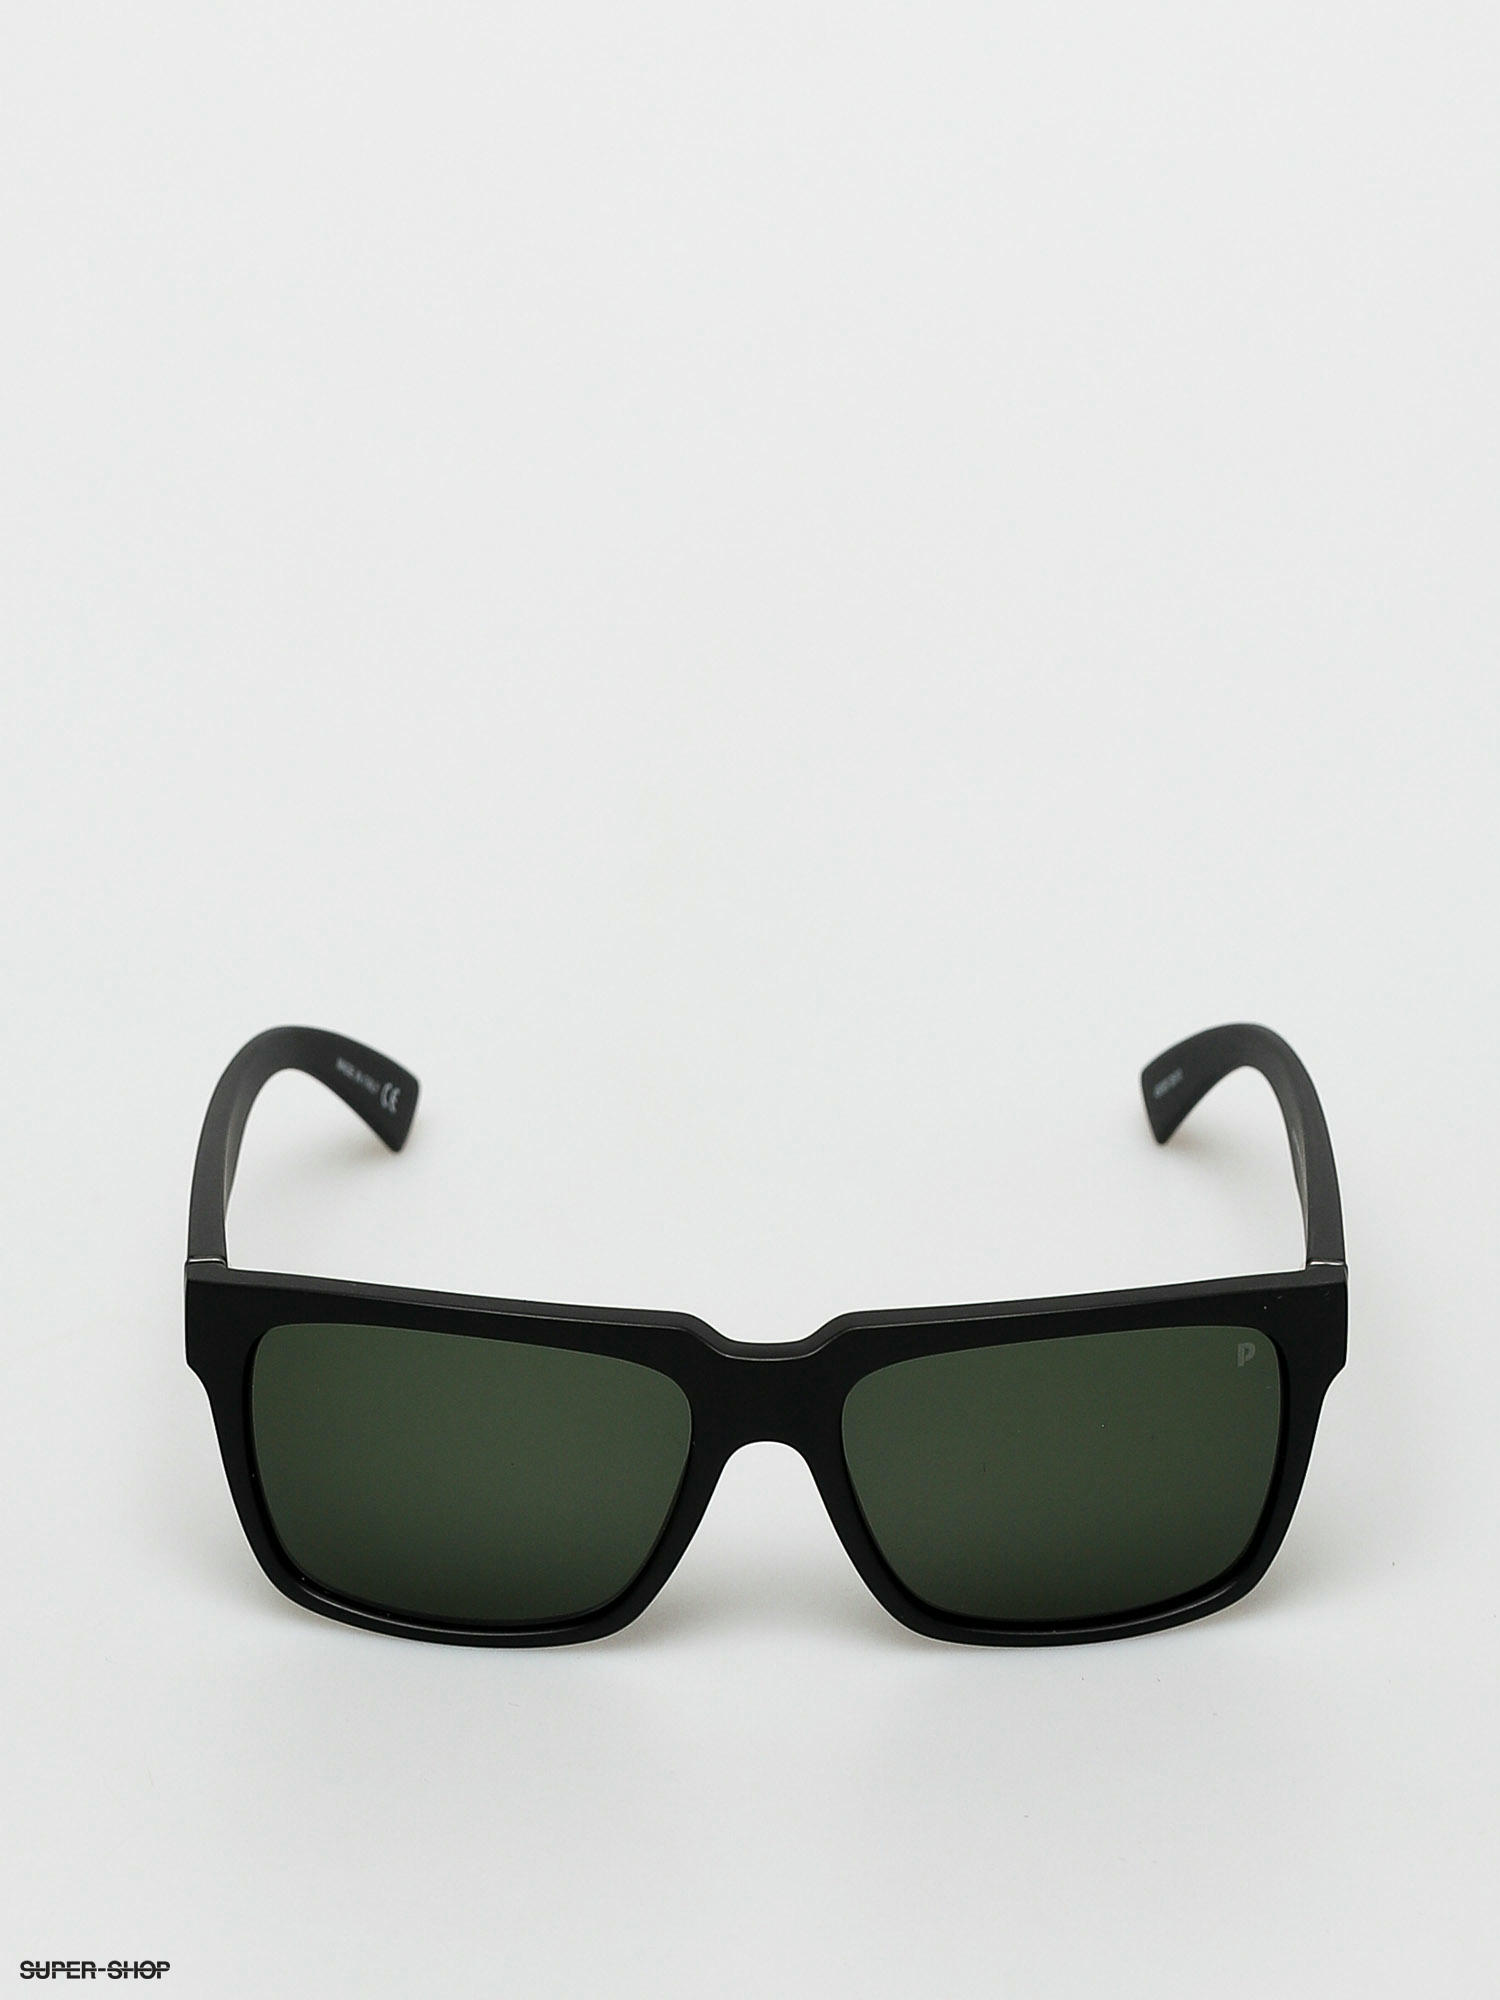 Sunglasses black/green Bruiser p) (matte Quiksilver Polarized